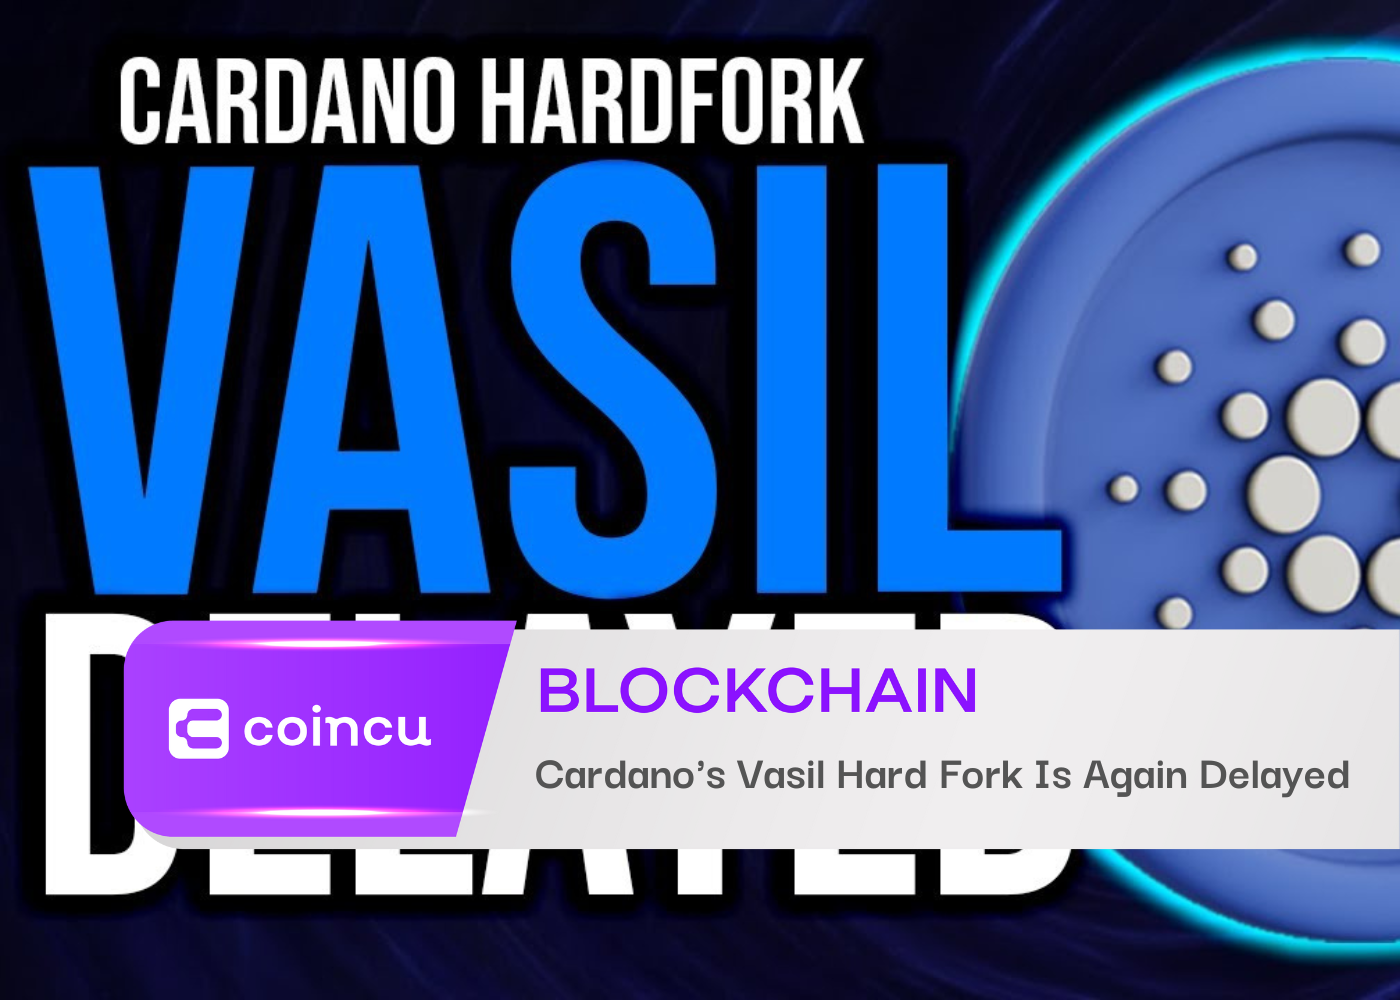 Cardano’s Vasil Hard Fork Is Delayed Again